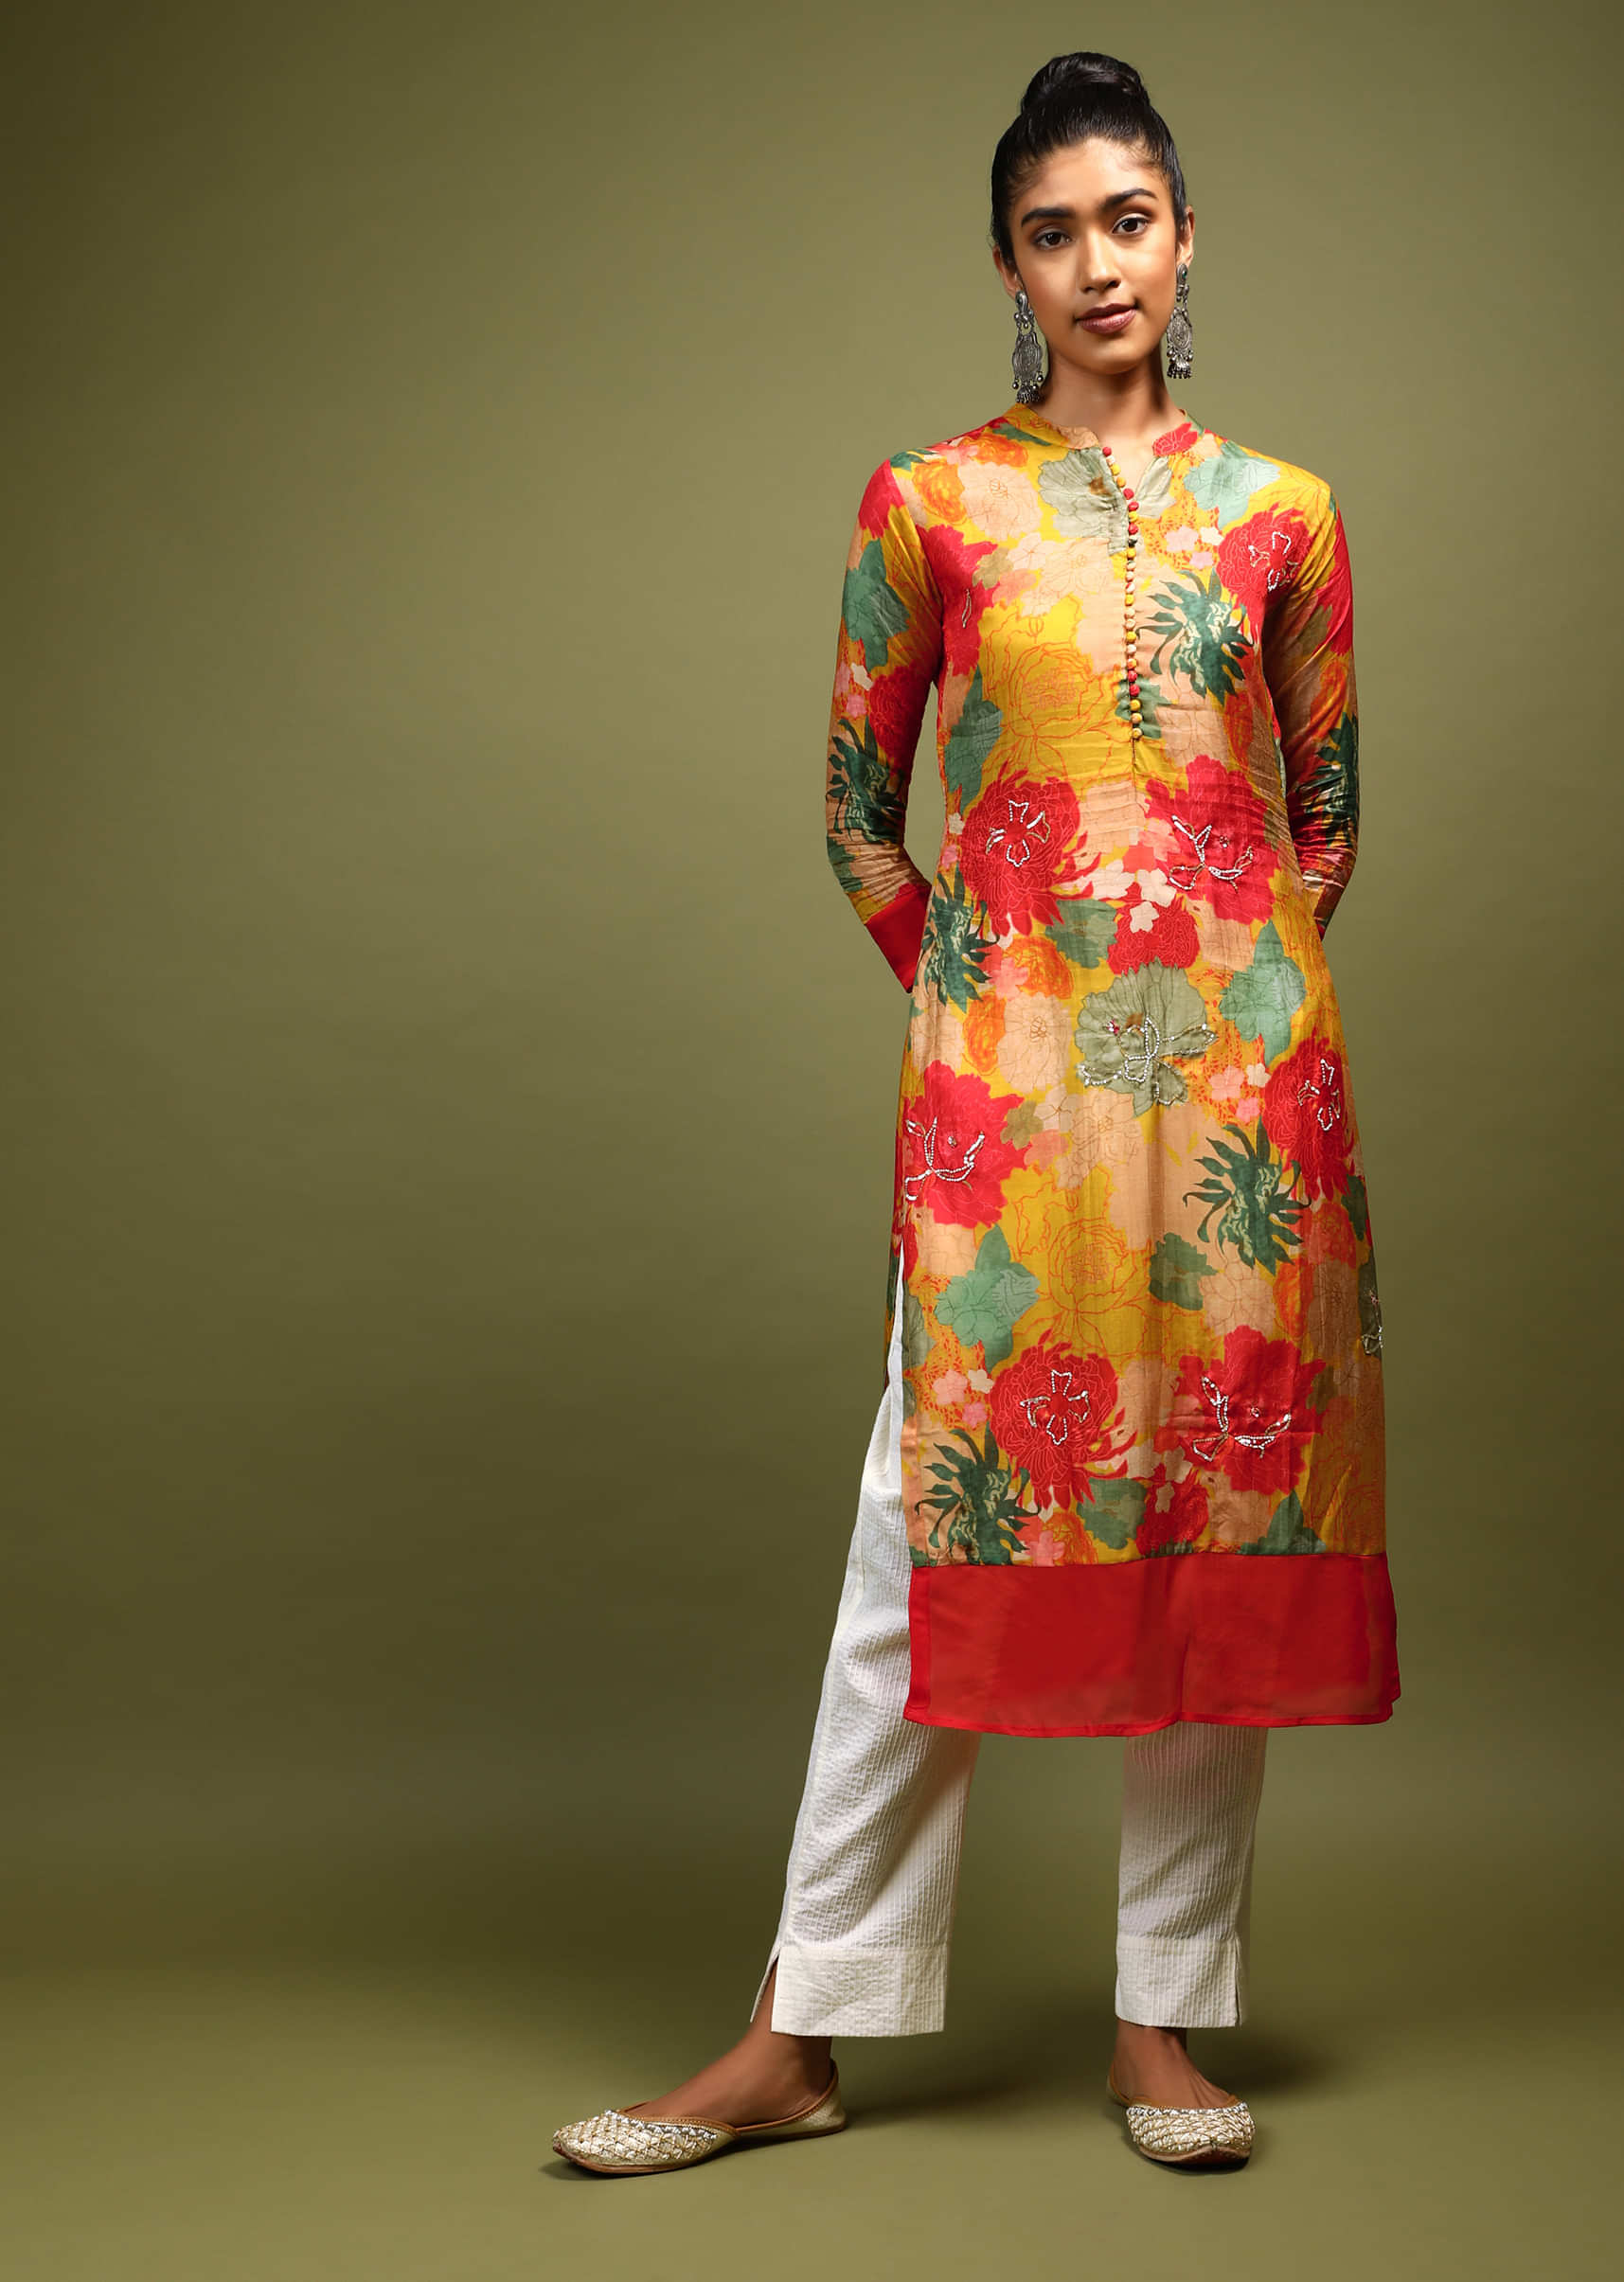 10 Best Floral Print Cotton Kurtis - LooksGud.com